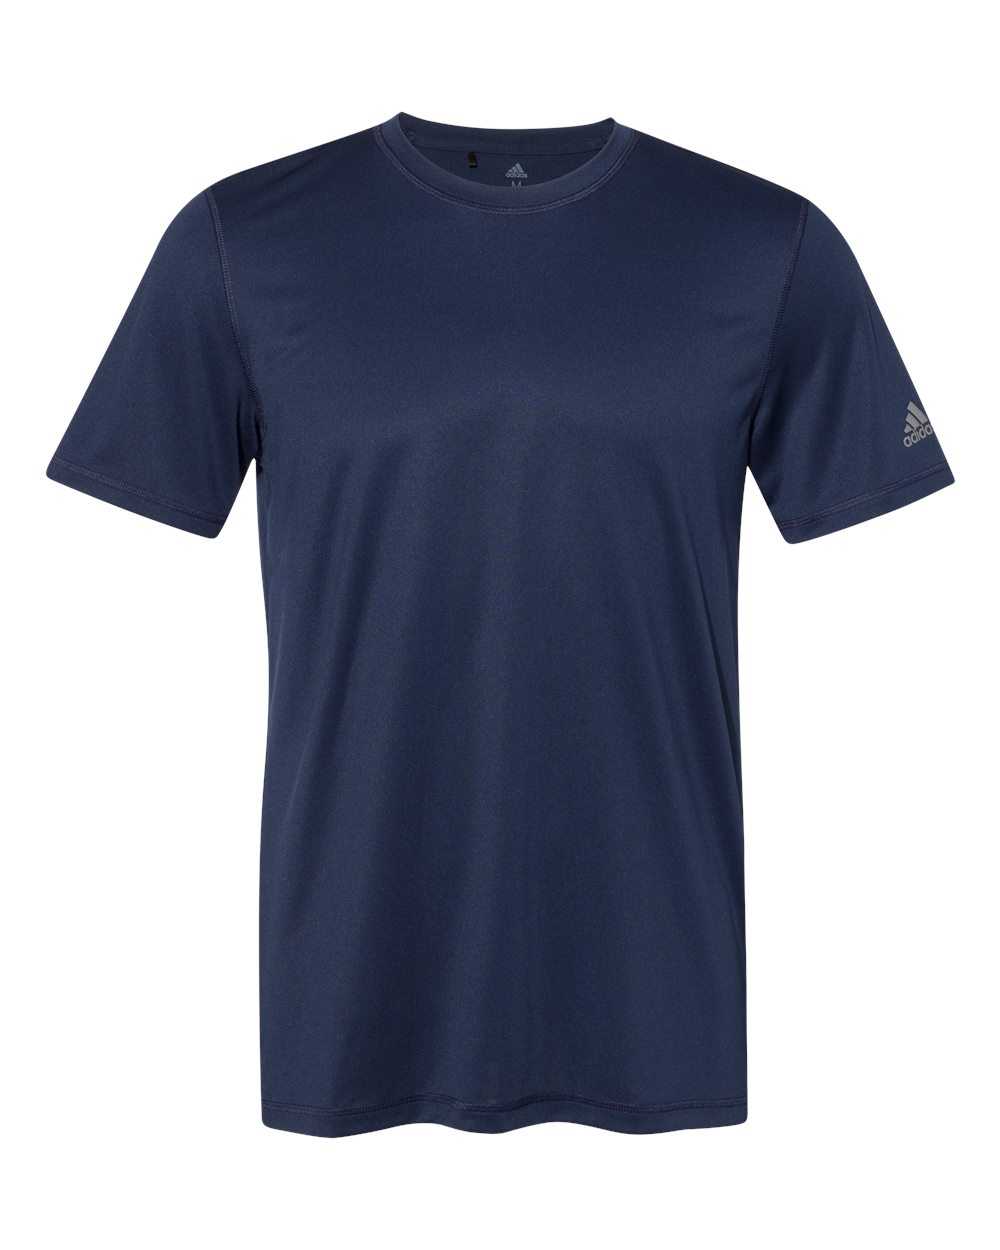 Adidas A376 Sport T-Shirt - Collegiate Navy - HIT a Double